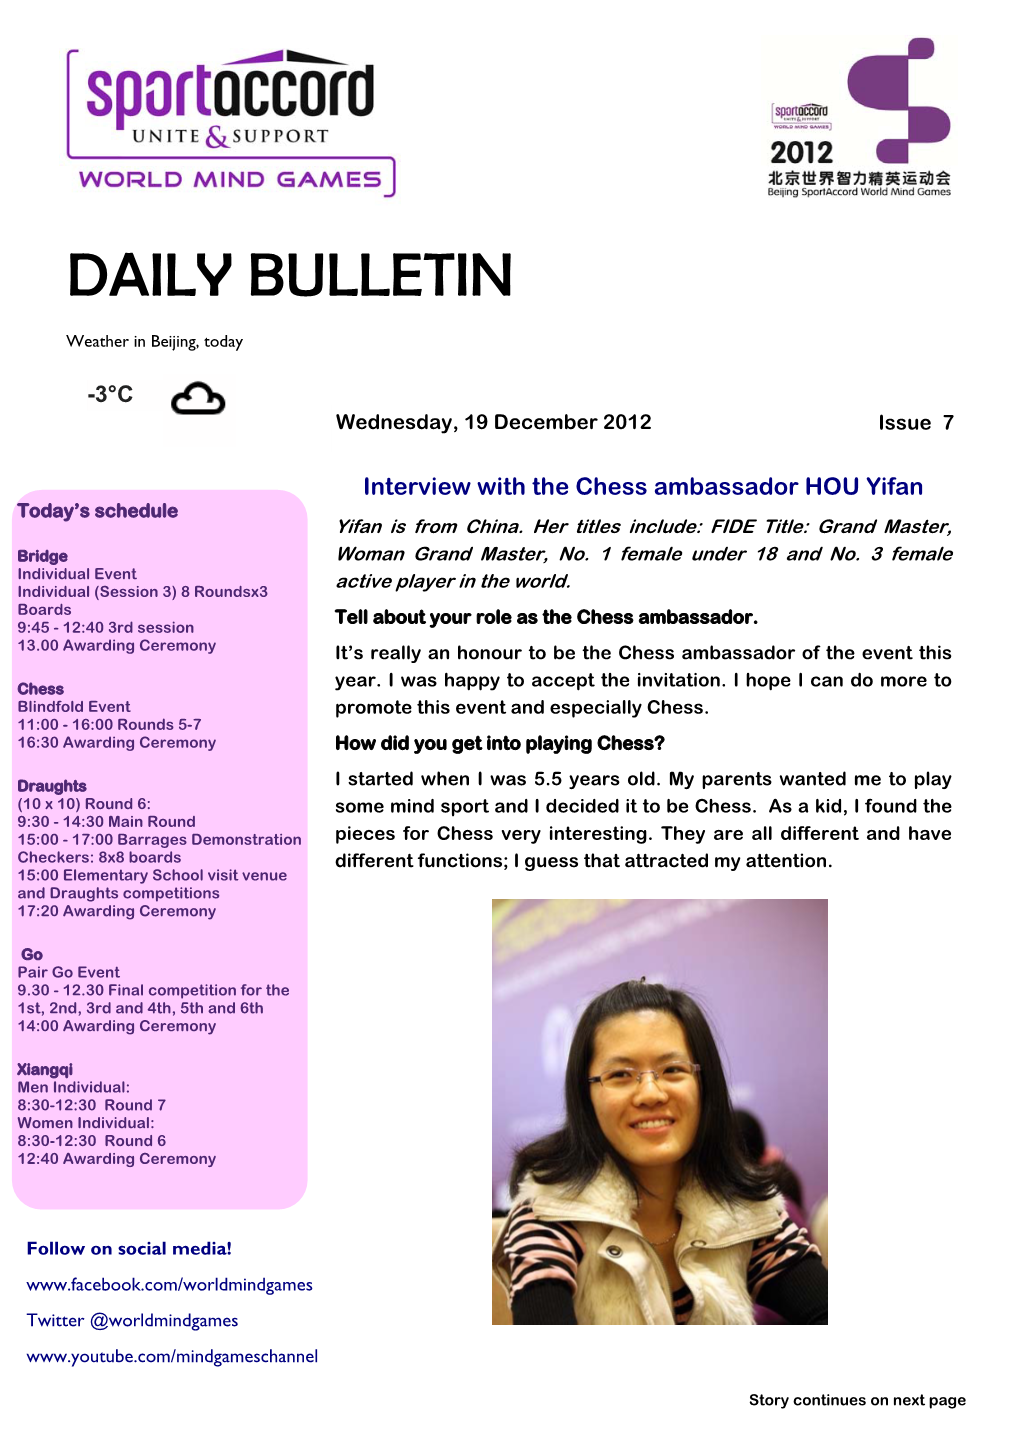 2012 Daily Bulletin 7